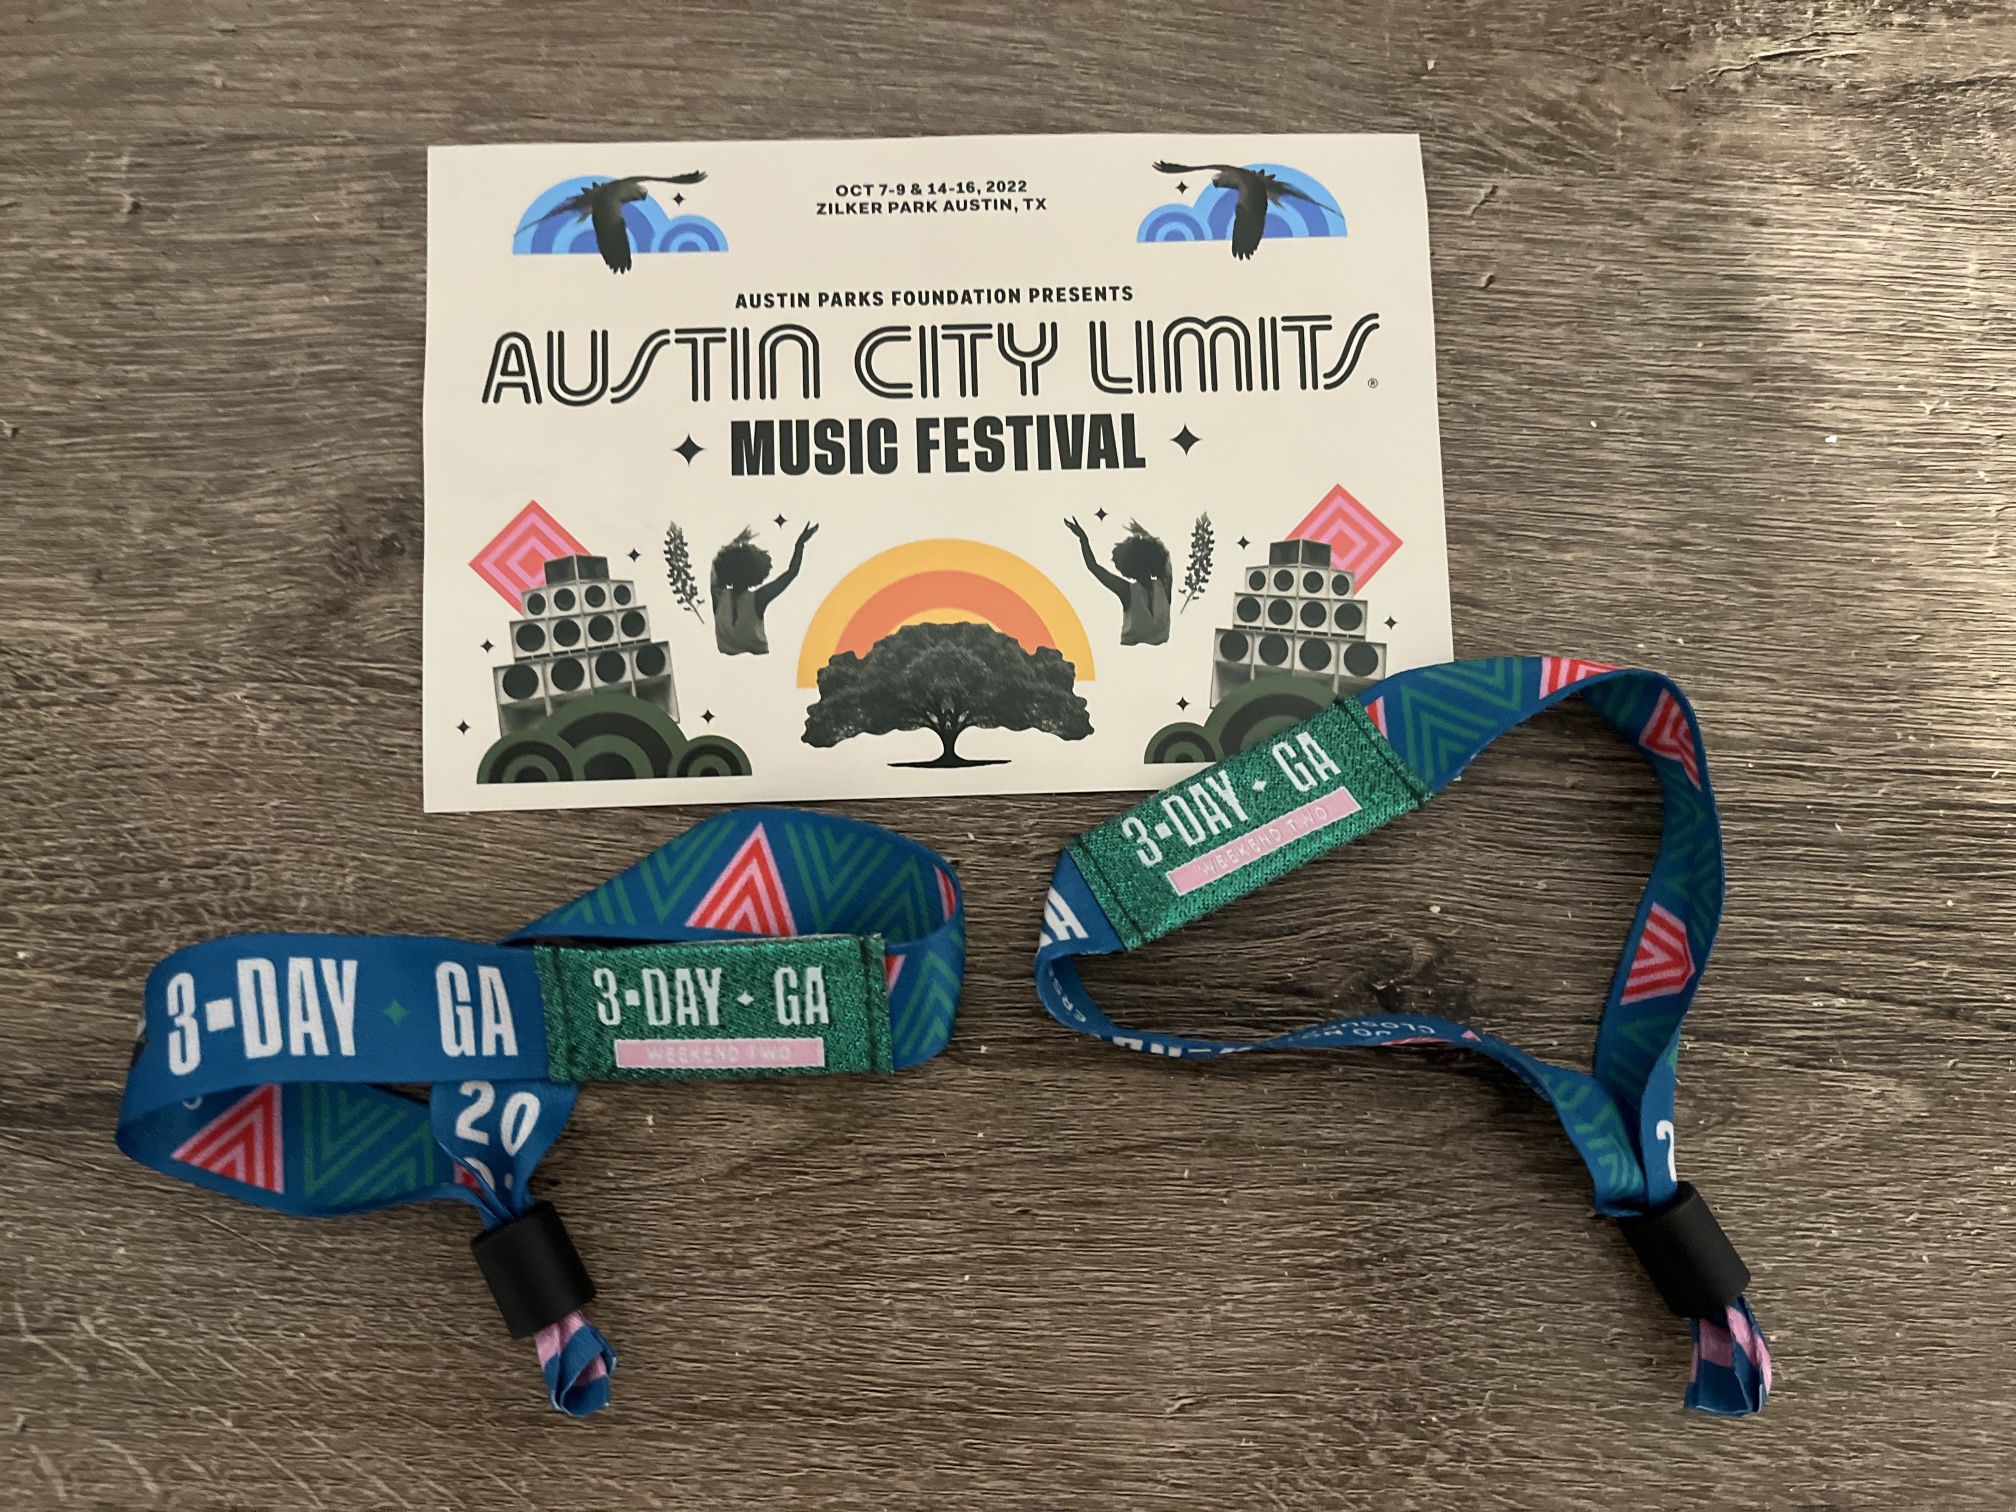 Austin City Limits Weekend 2, 2x 3-Day Passes